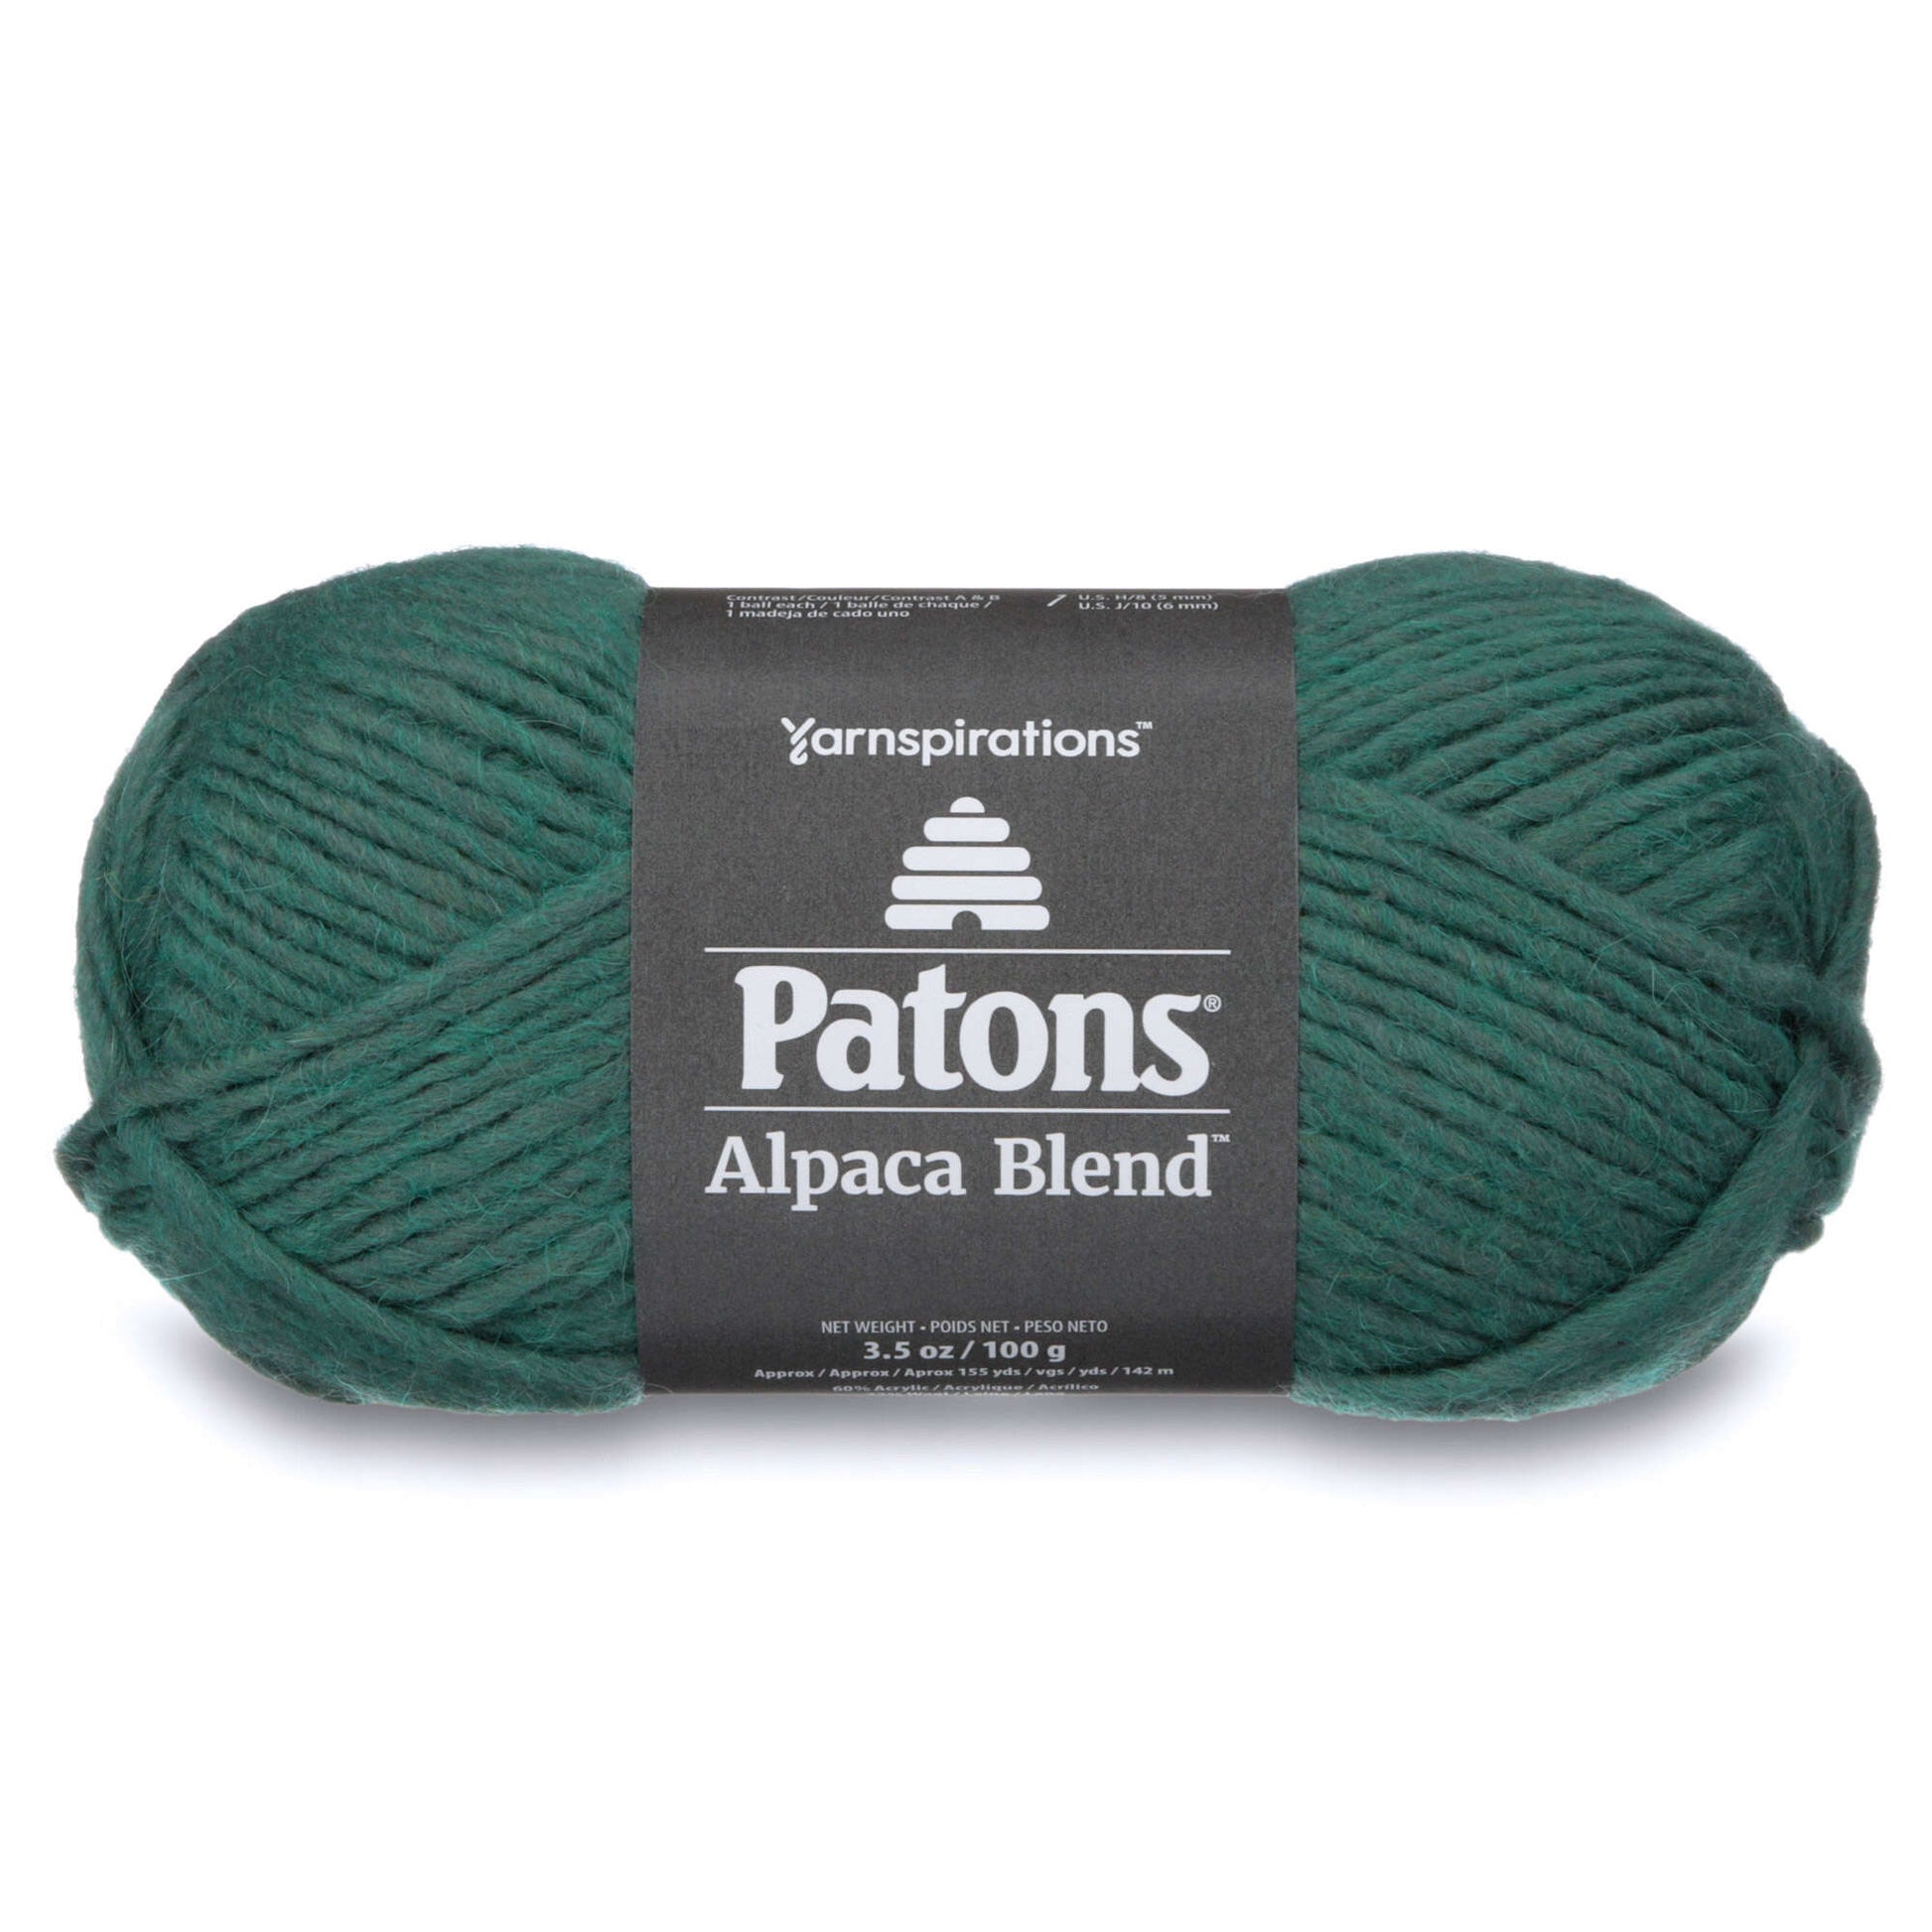 Patons Alpaca Blend Yarn - Discontinued Shades Lagoon